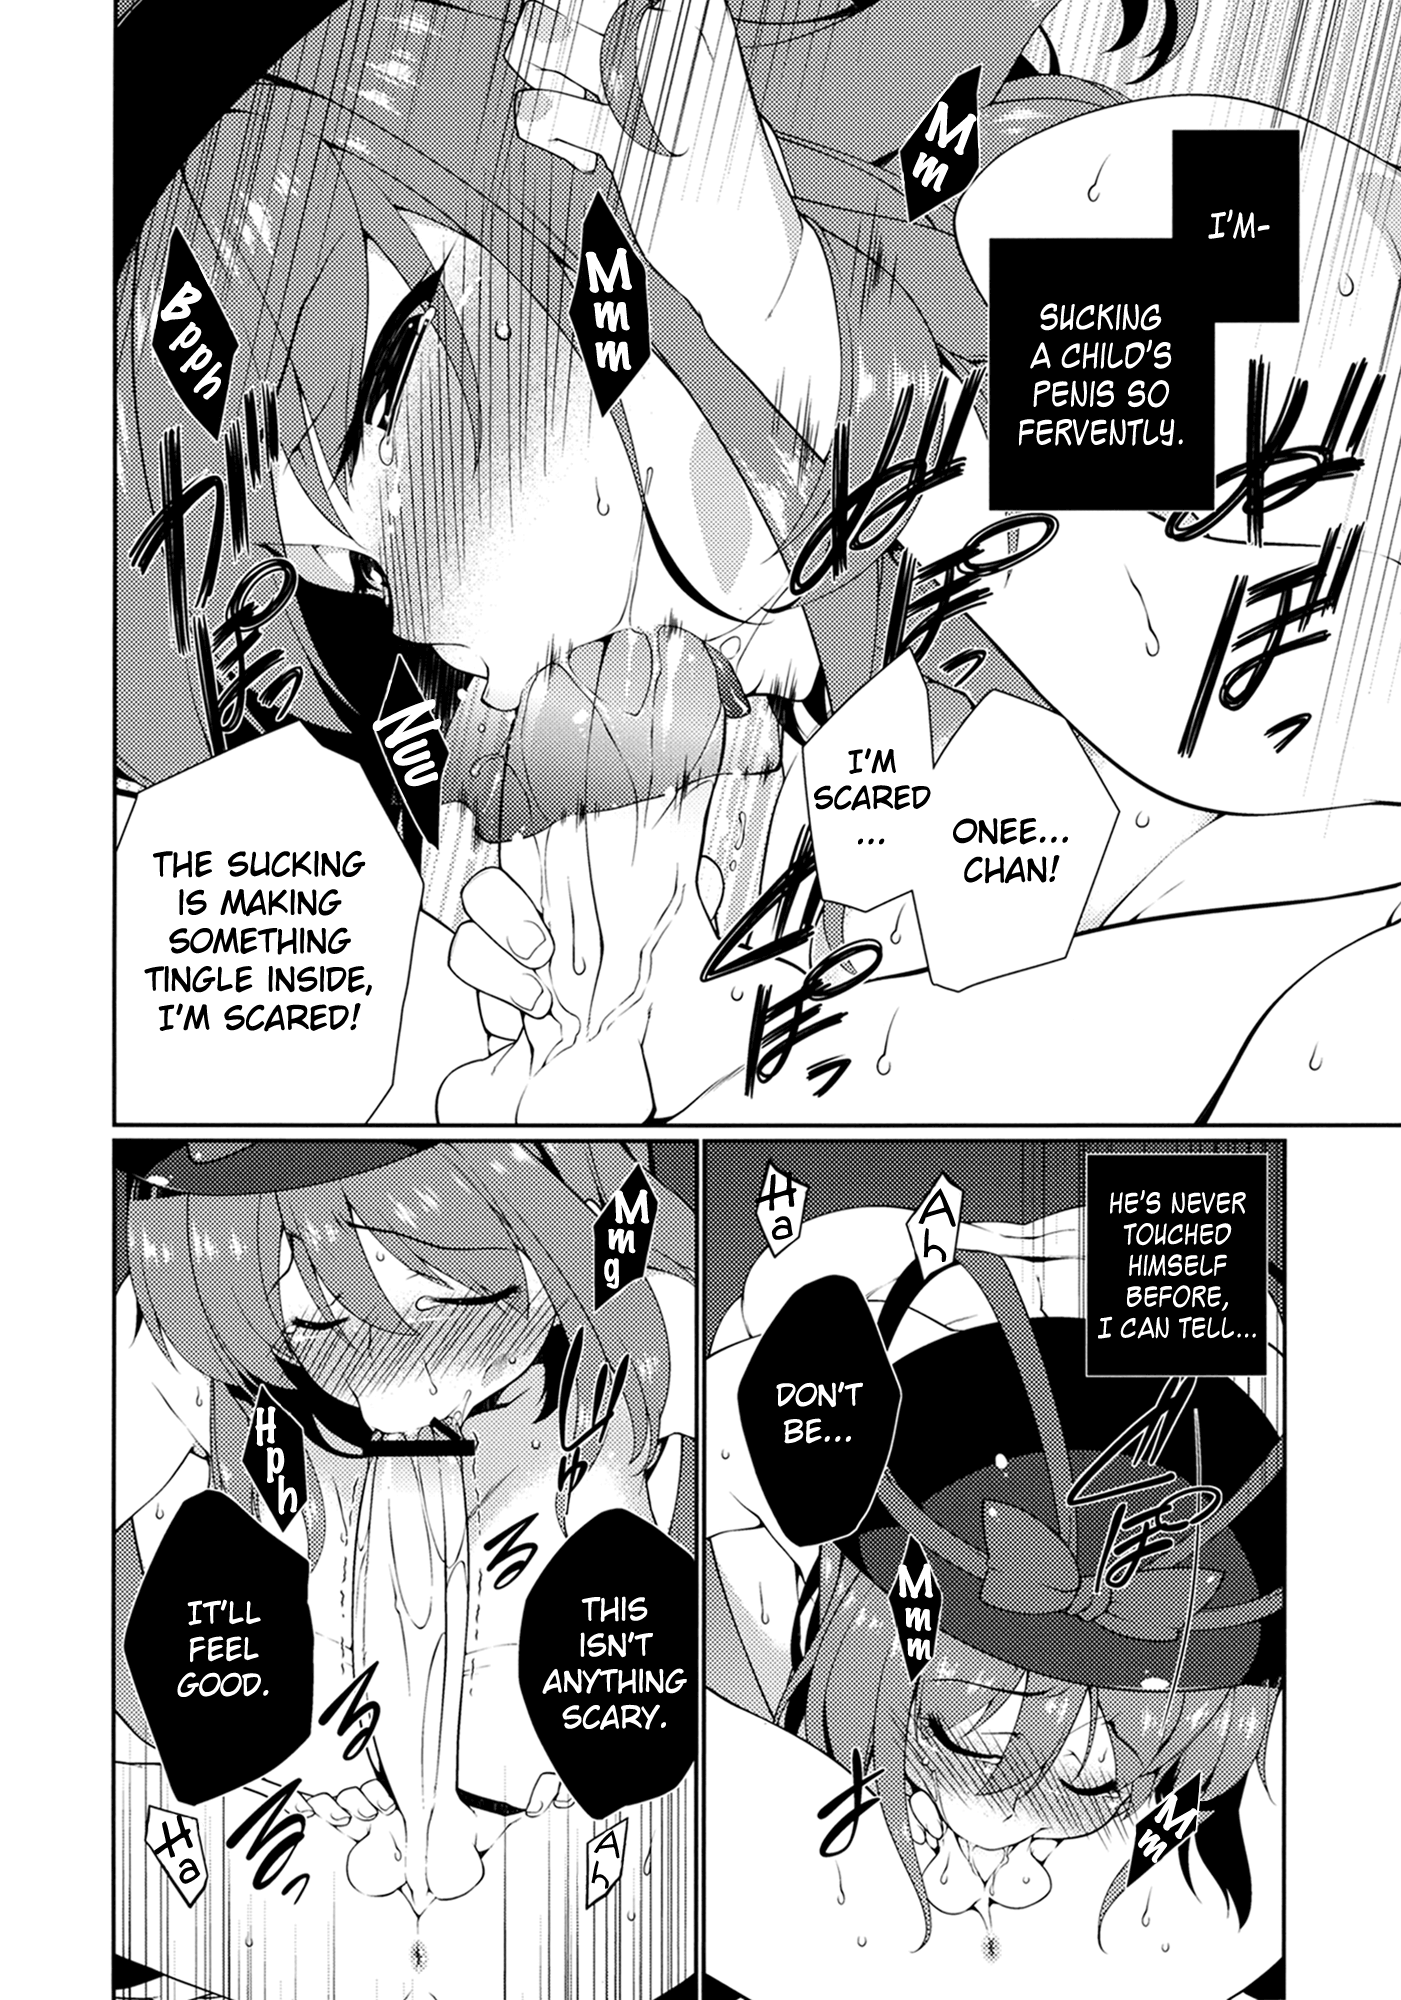 HI-Sexual Under Age hentai manga picture 9